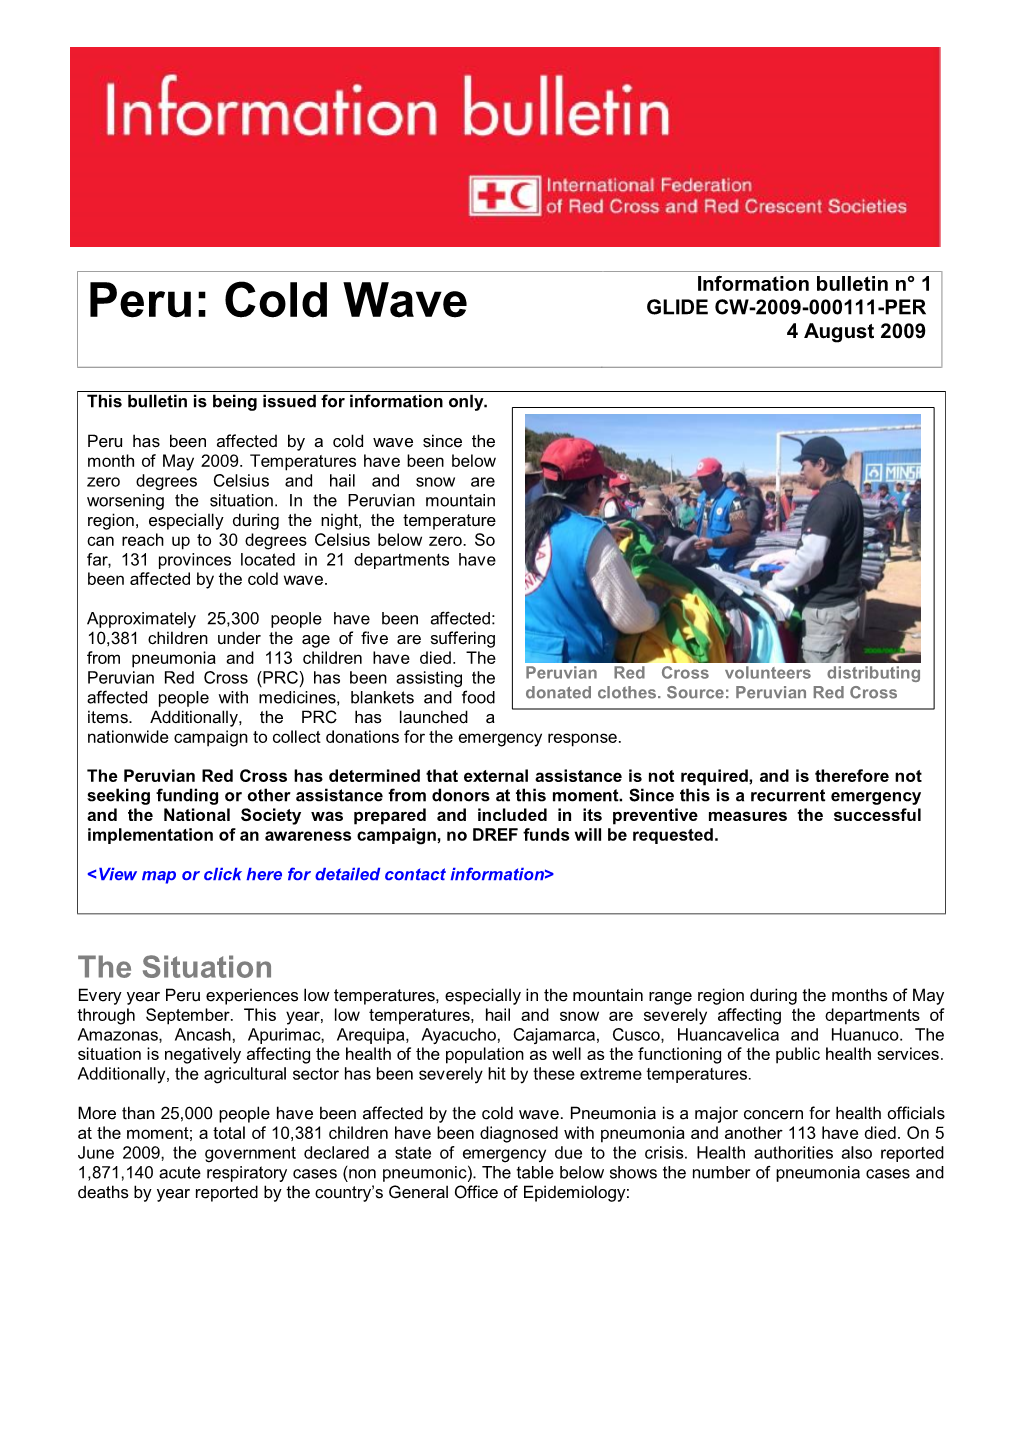 Information Bulletin N° 1 Peru: Cold Wave GLIDE CW-2009-000111-PER 4 August 2009